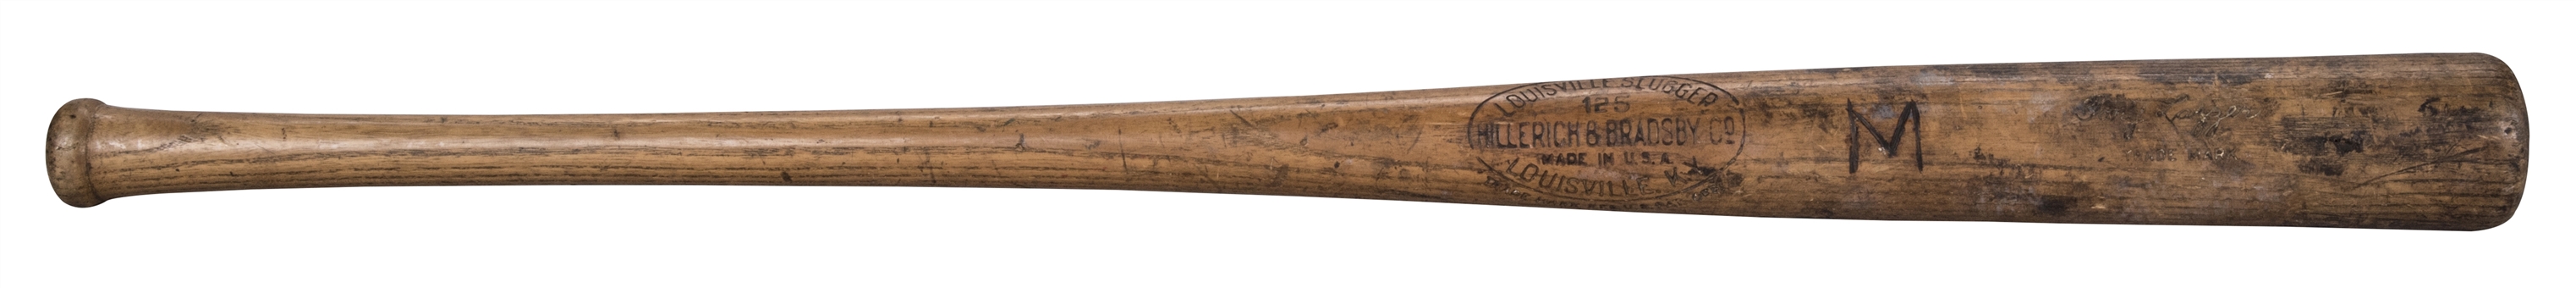 1928-31 Tony Lazzeri Game Used Hillerich & Bradsby L16 Model Bat (PSA/DNA)